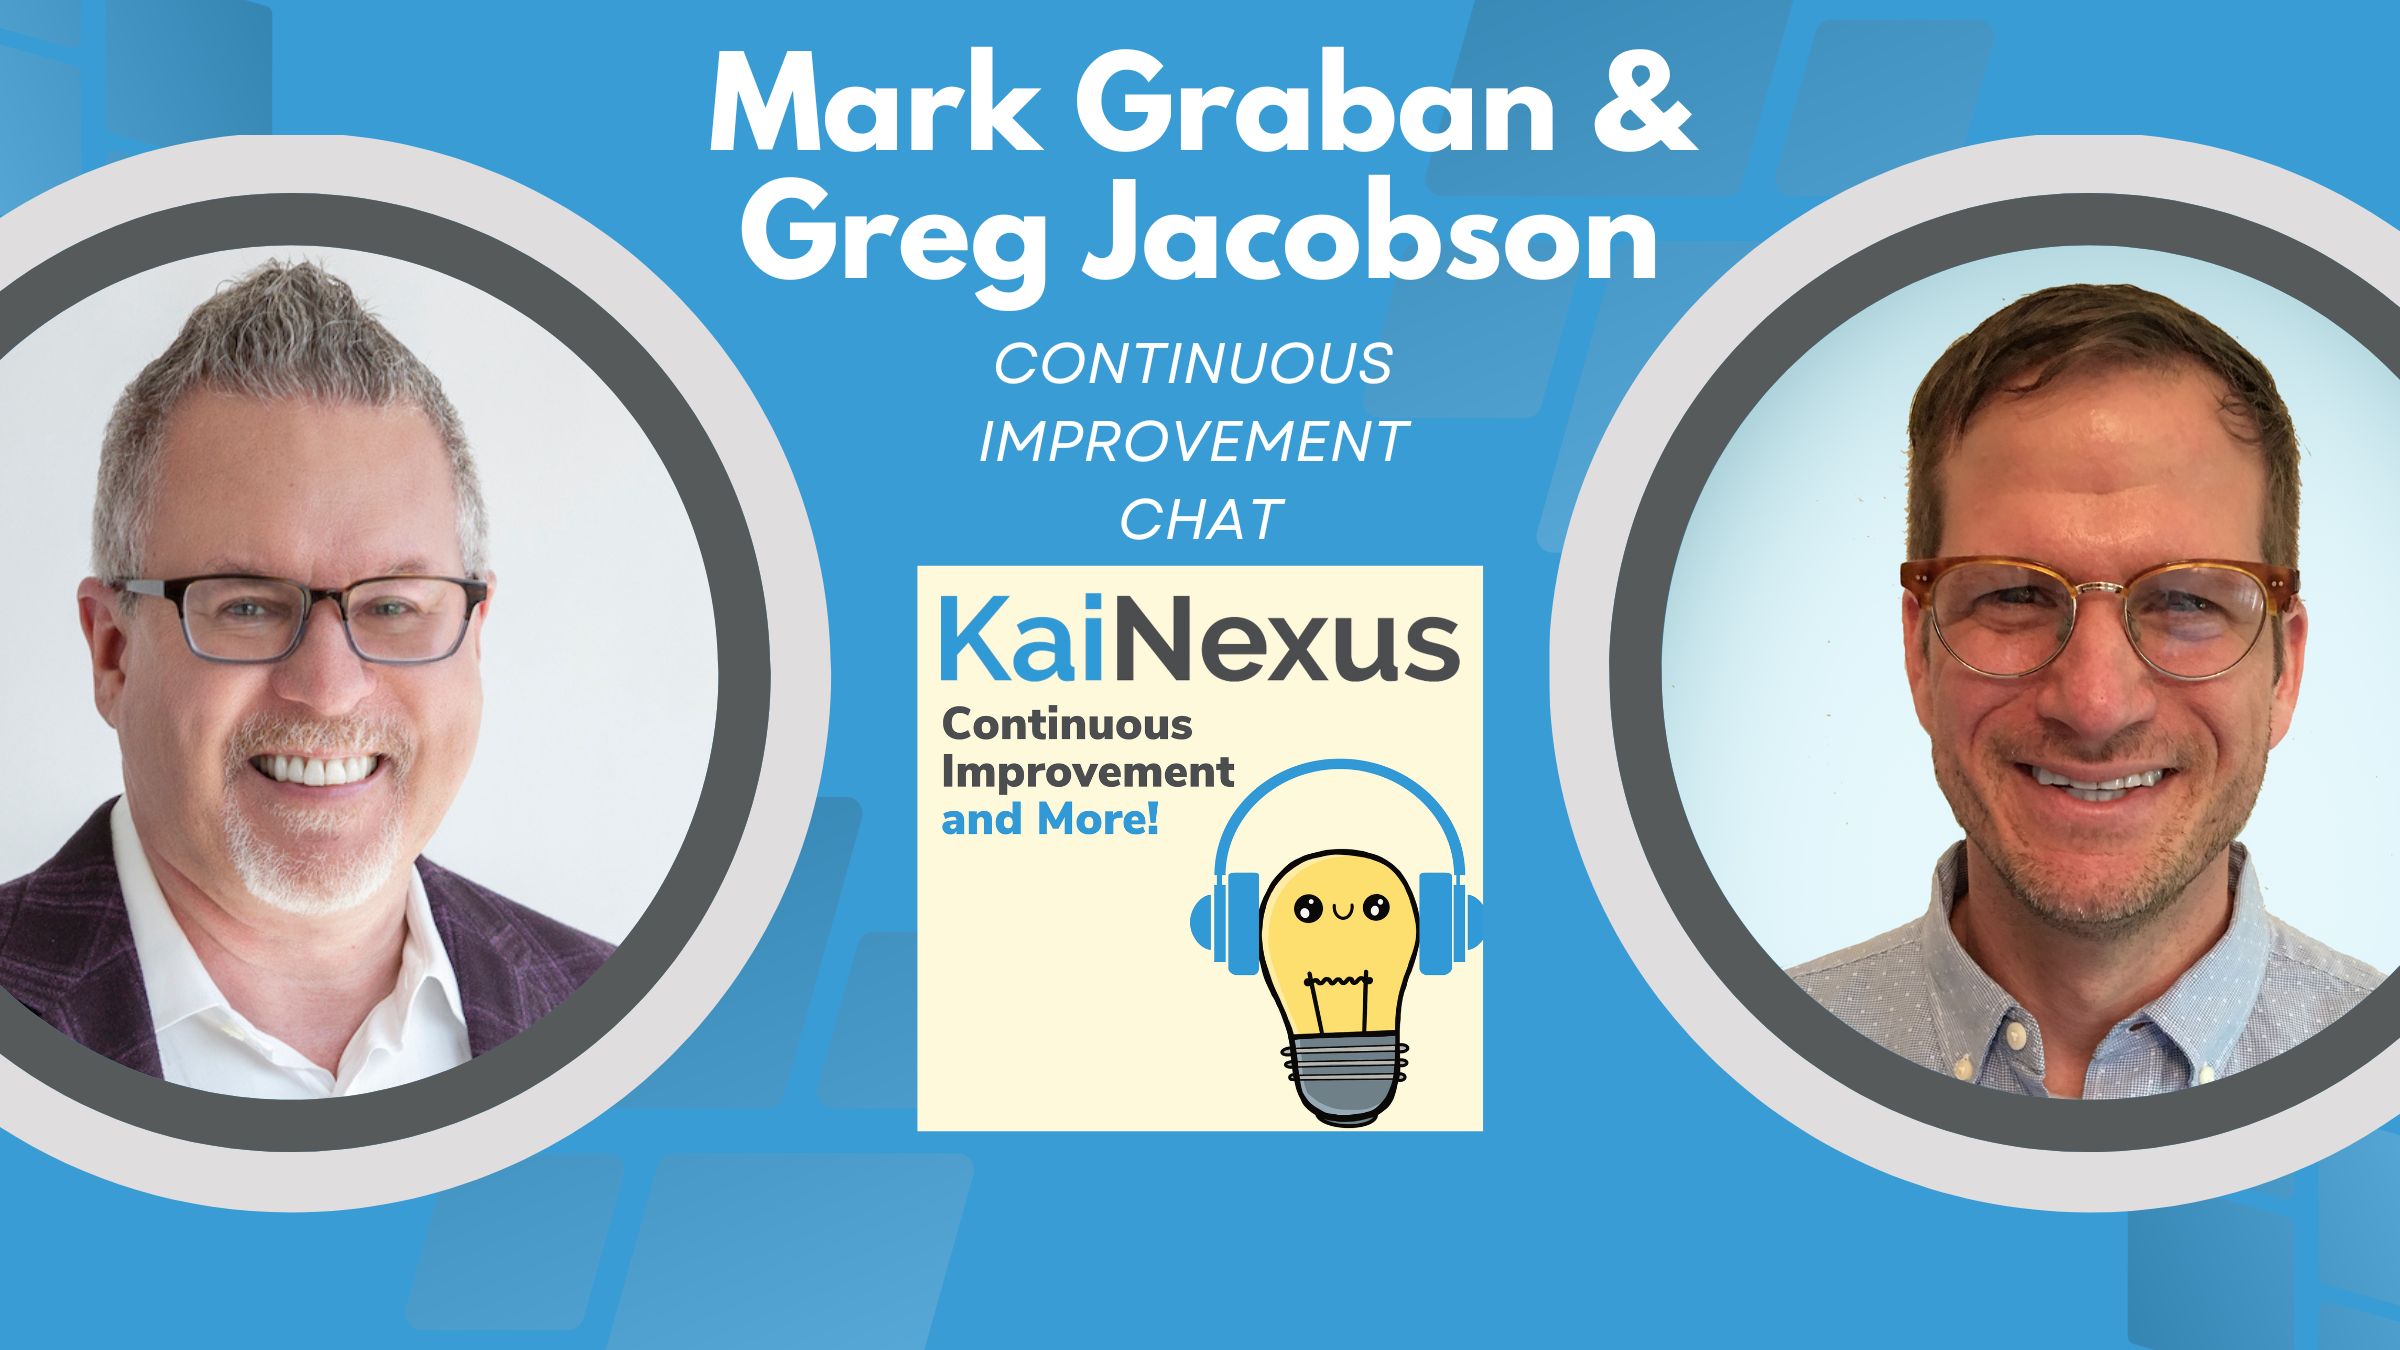 Mark Graban & Greg Jacobson Discuss Continuous Improvement and Customer Experience Design